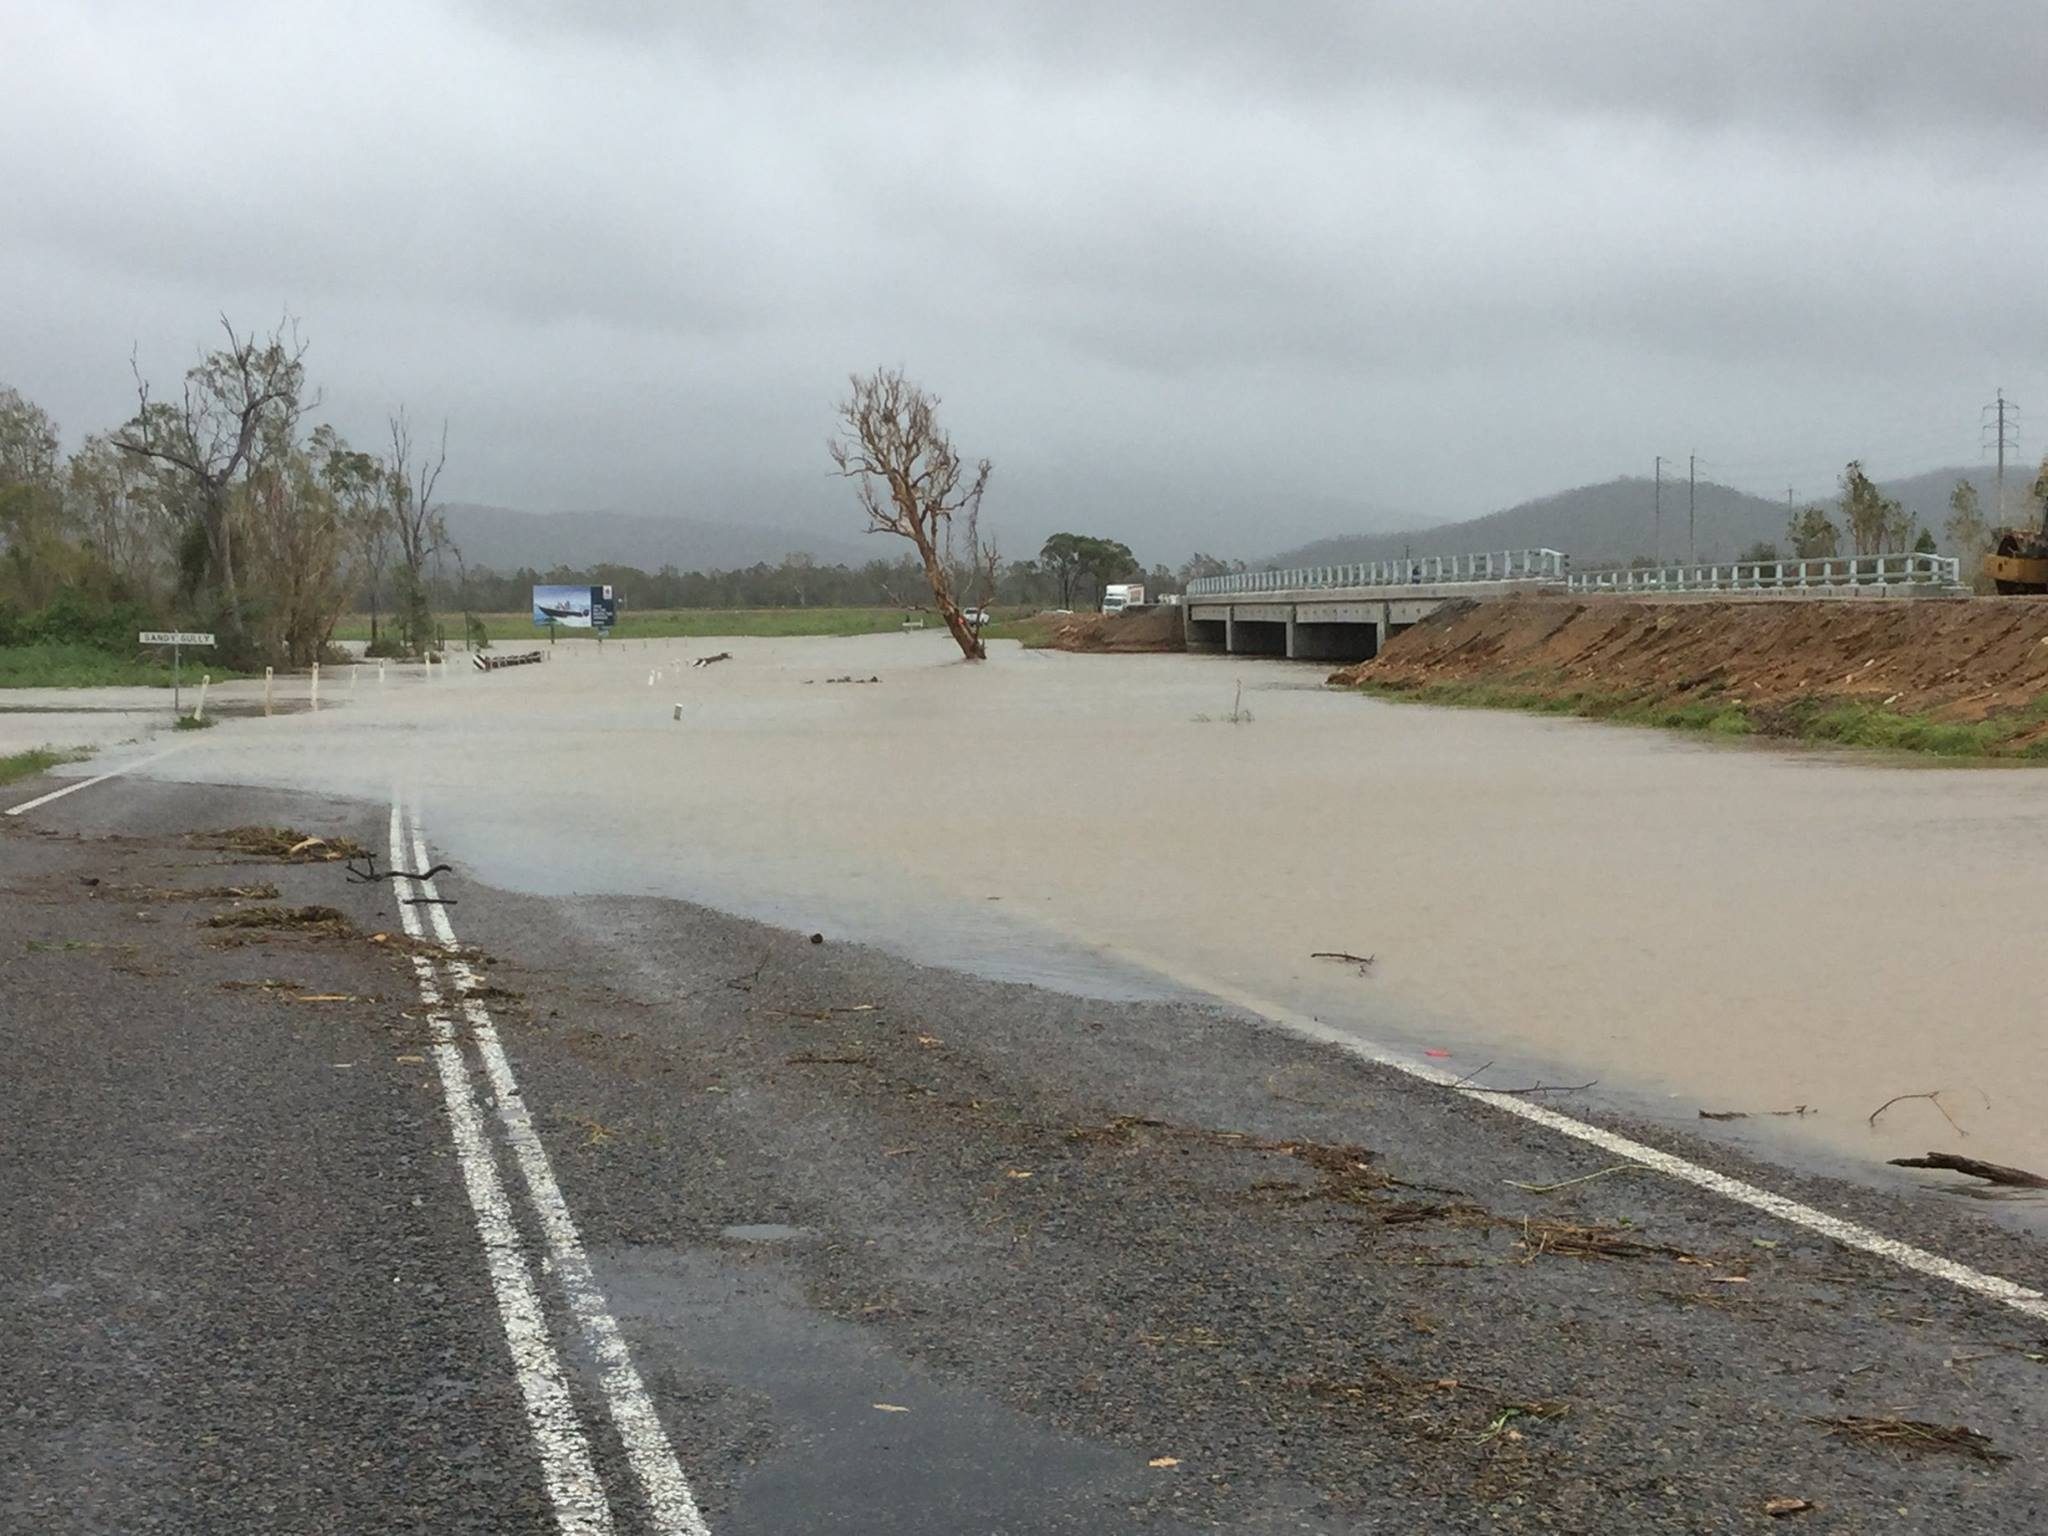 Military mobilizes to help cyclone-ravaged Australian region